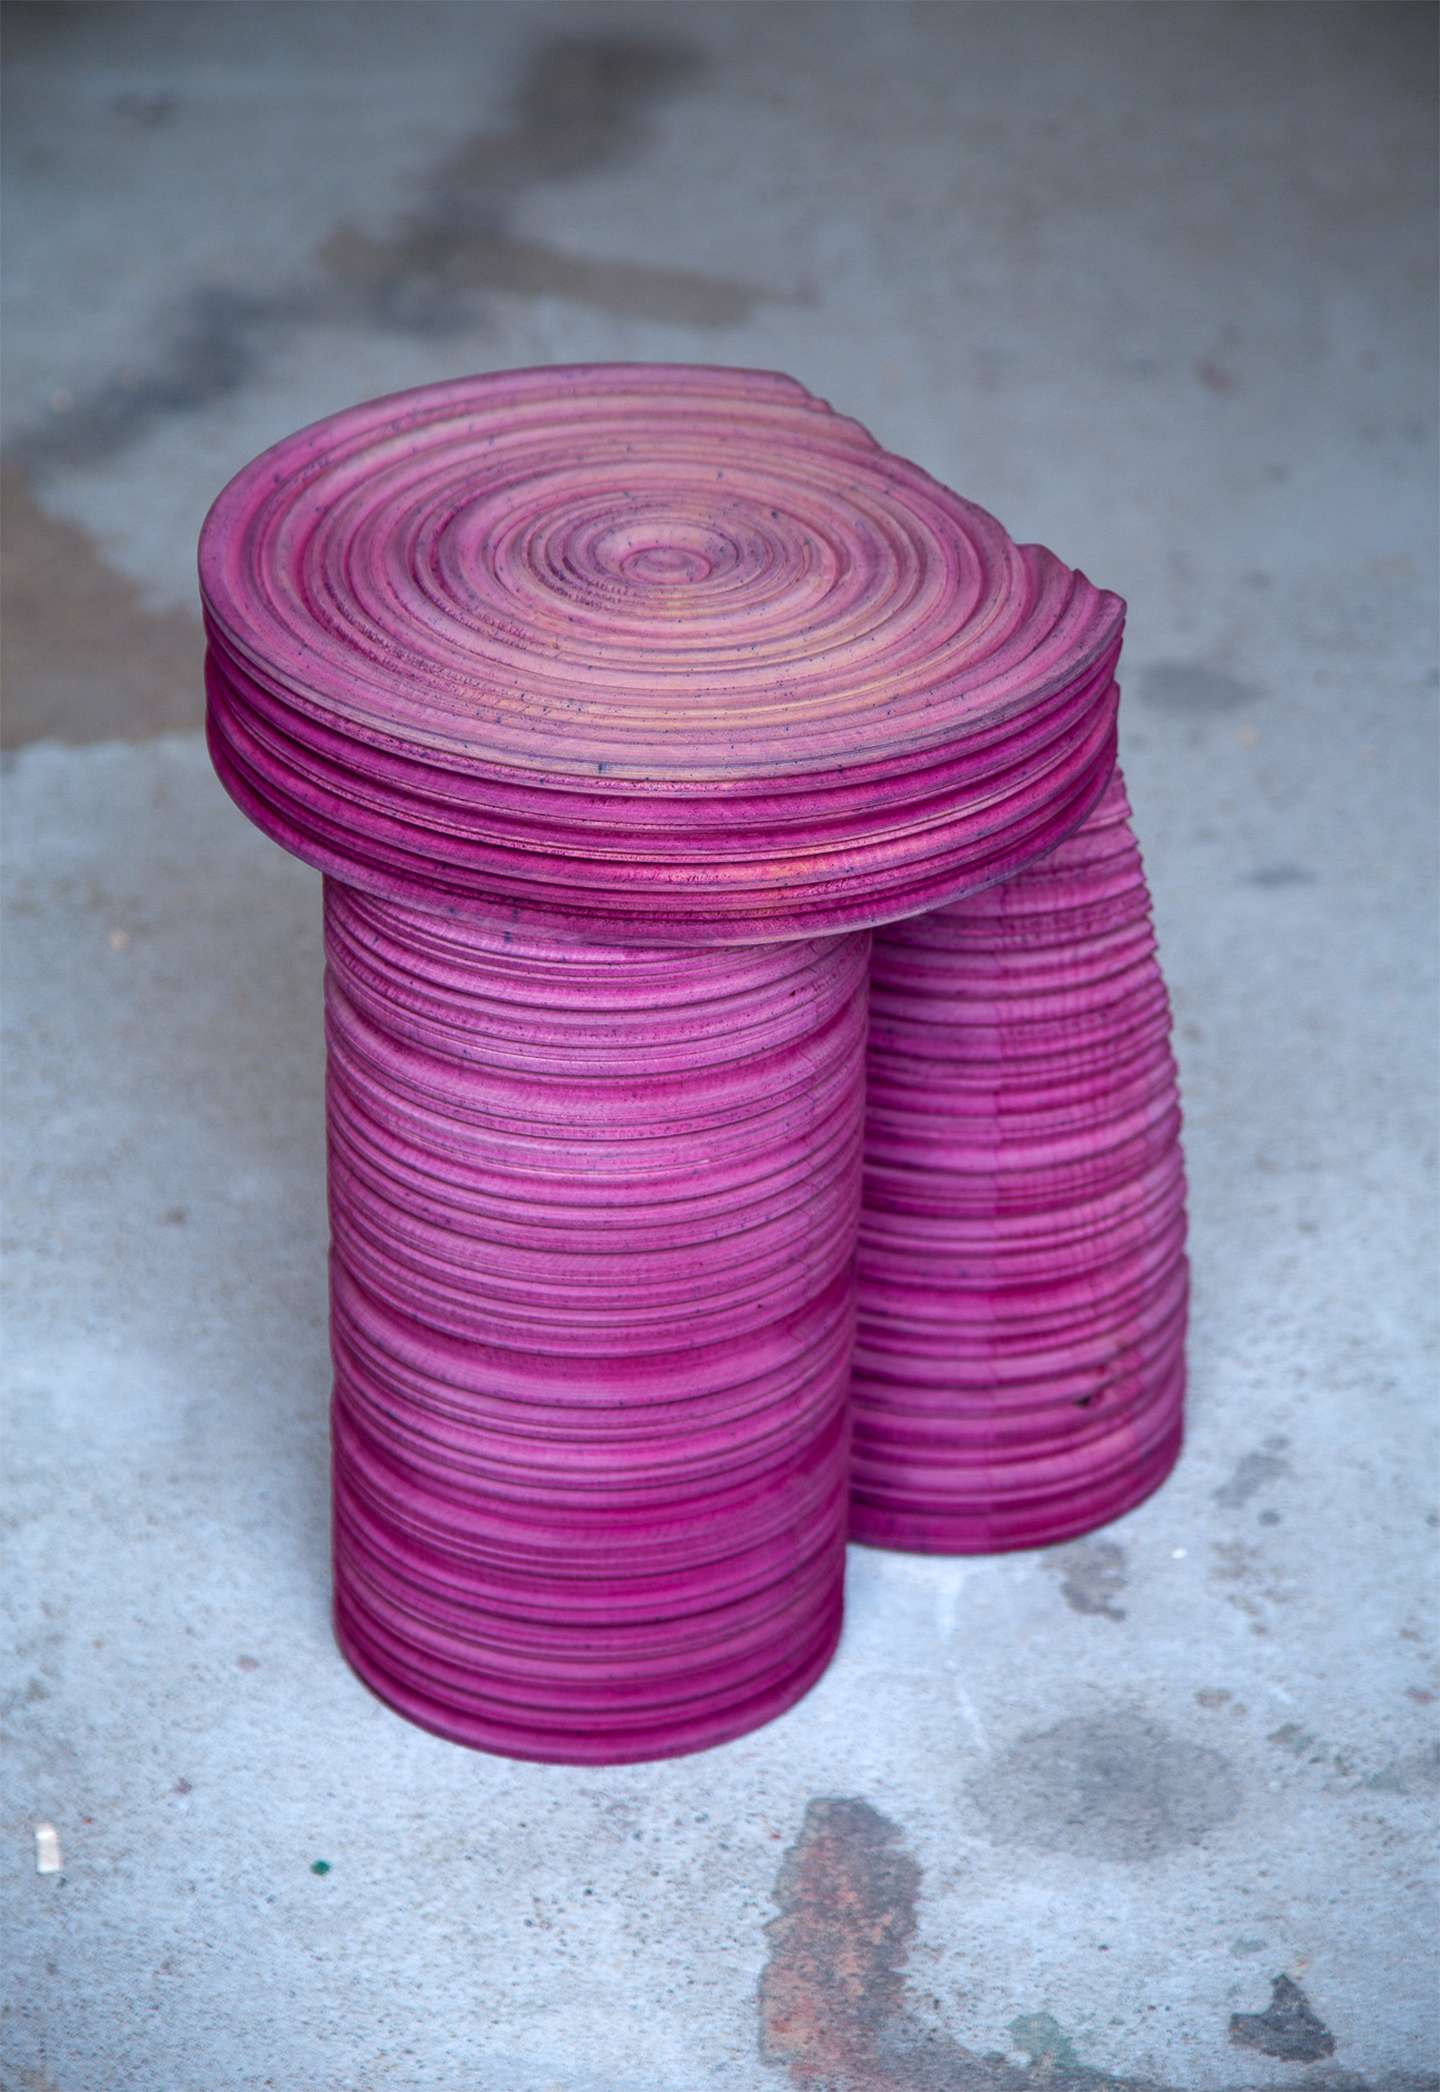 Turned purple stool, 2022. Design by Marc Sweeney. Photo courtesy of Marc Sweeney